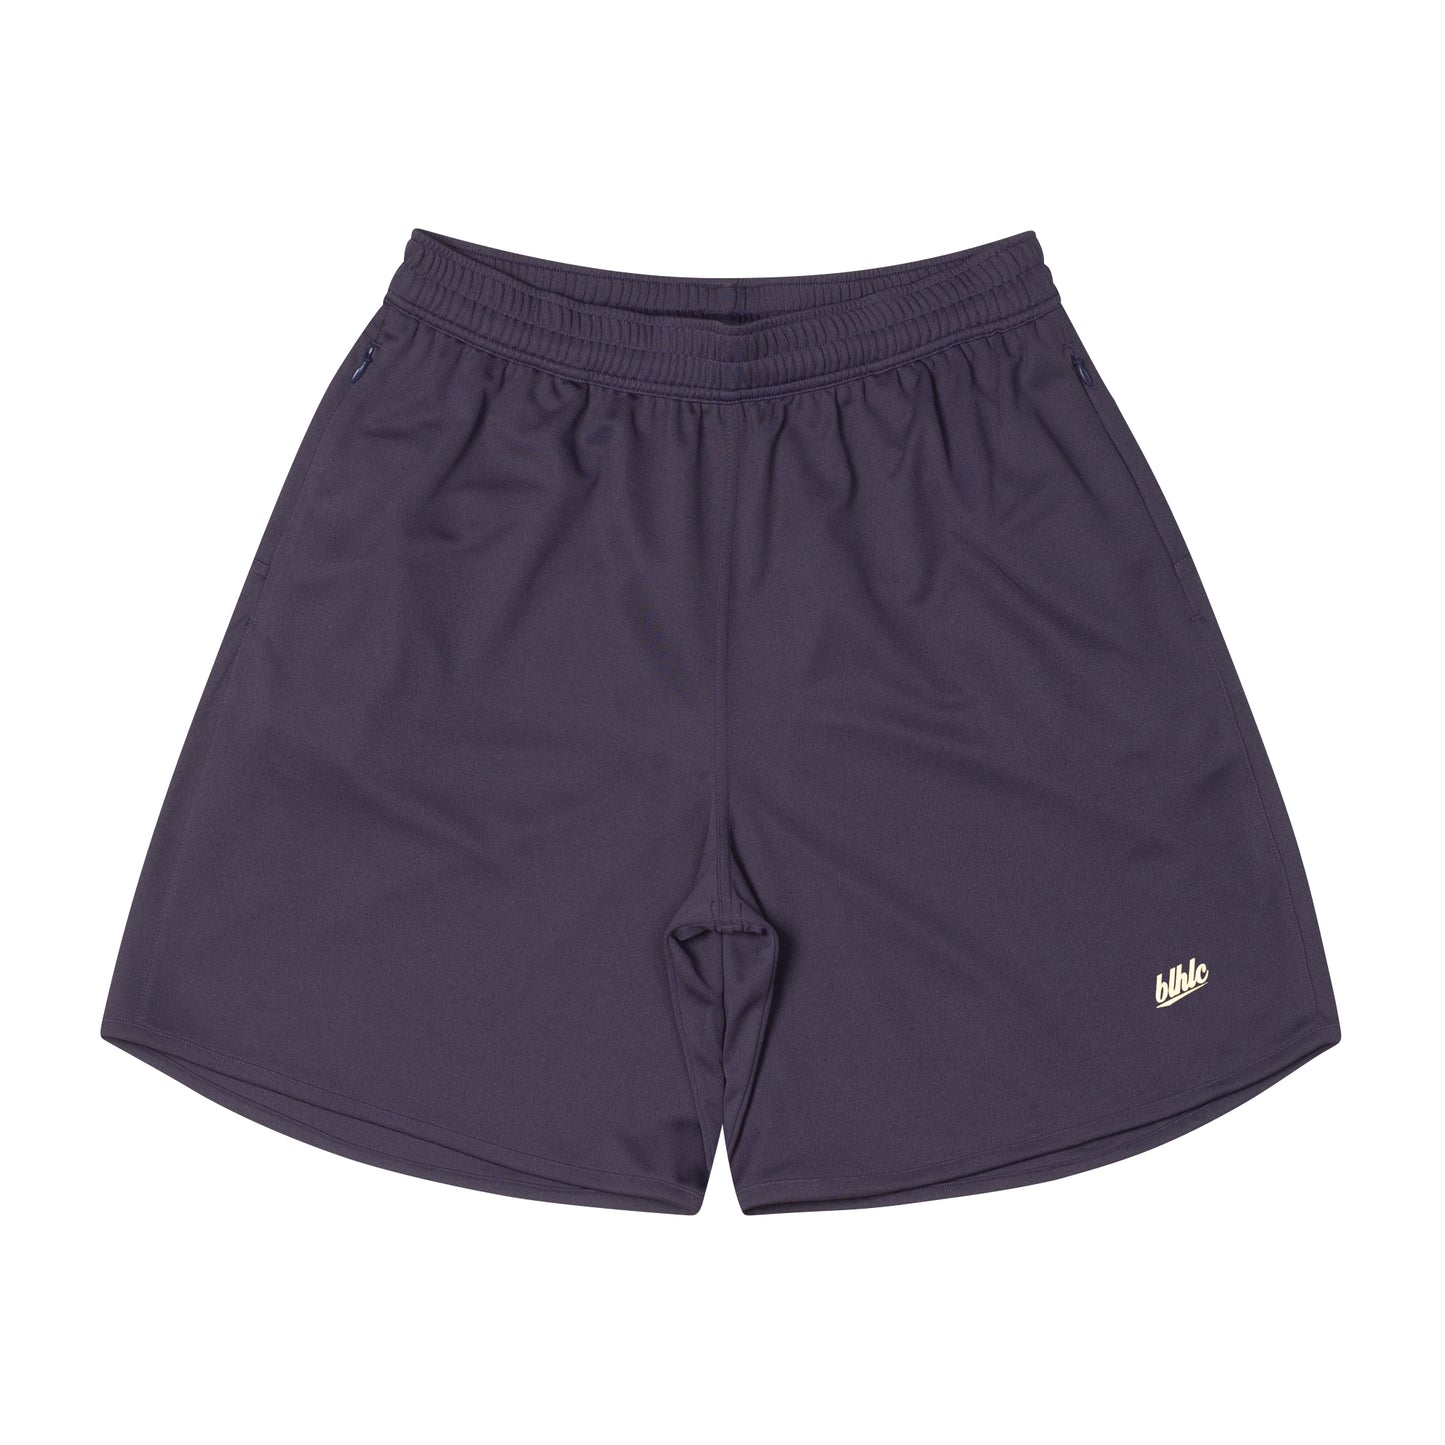 Basic Zip Shorts (dark grape/off white)